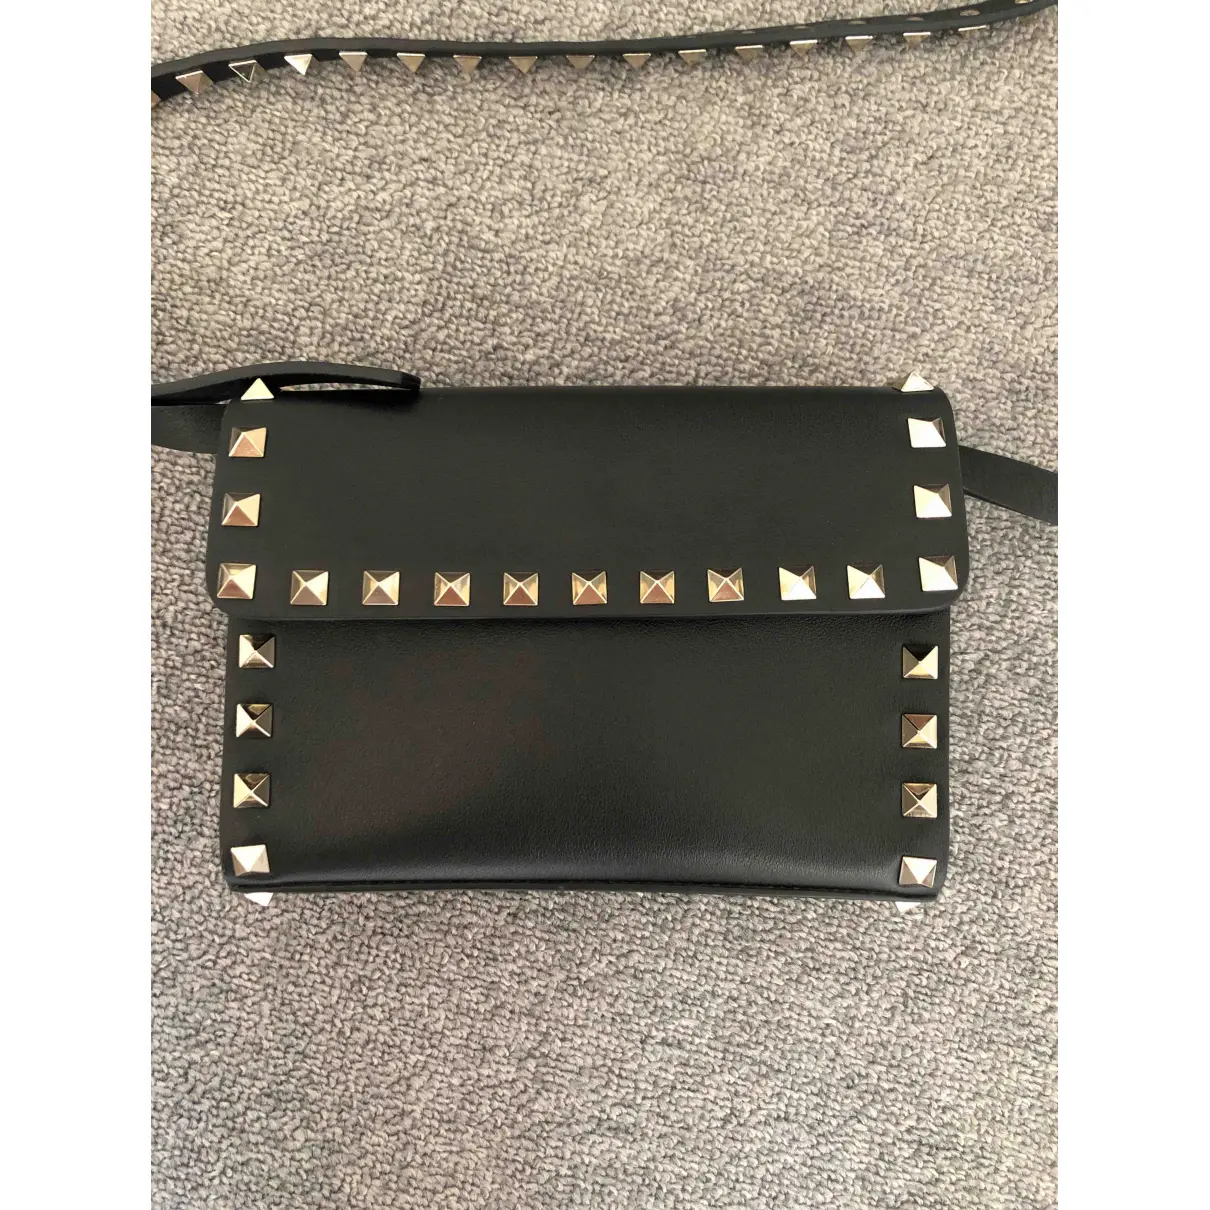 Buy Valentino Garavani Rockstud leather handbag online